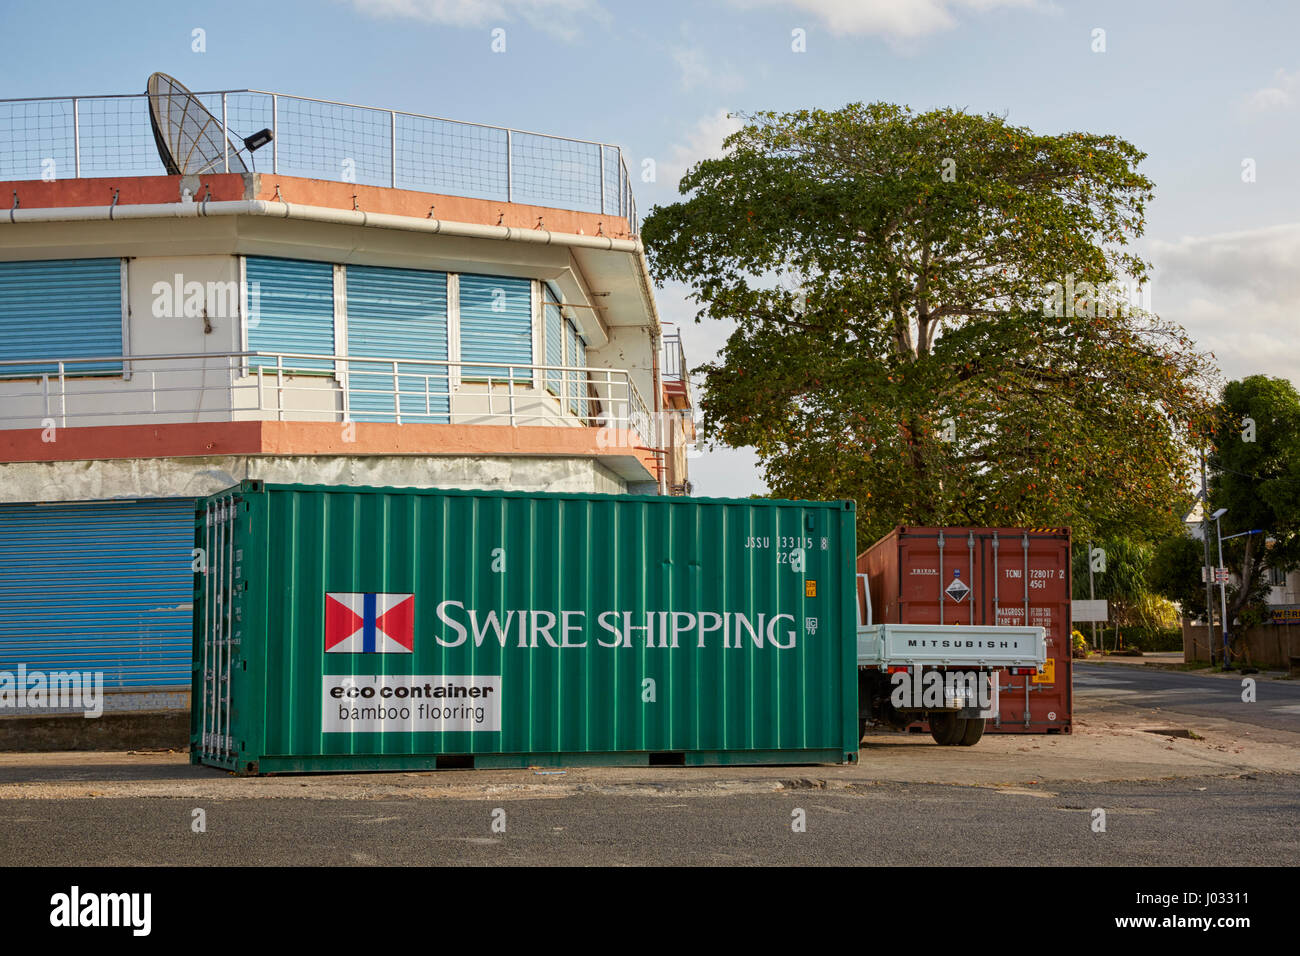 Swire Shipping, Eco Container, Bamboo Flooring, Port Vila, Efate Island, Vanuatu Stock Photo